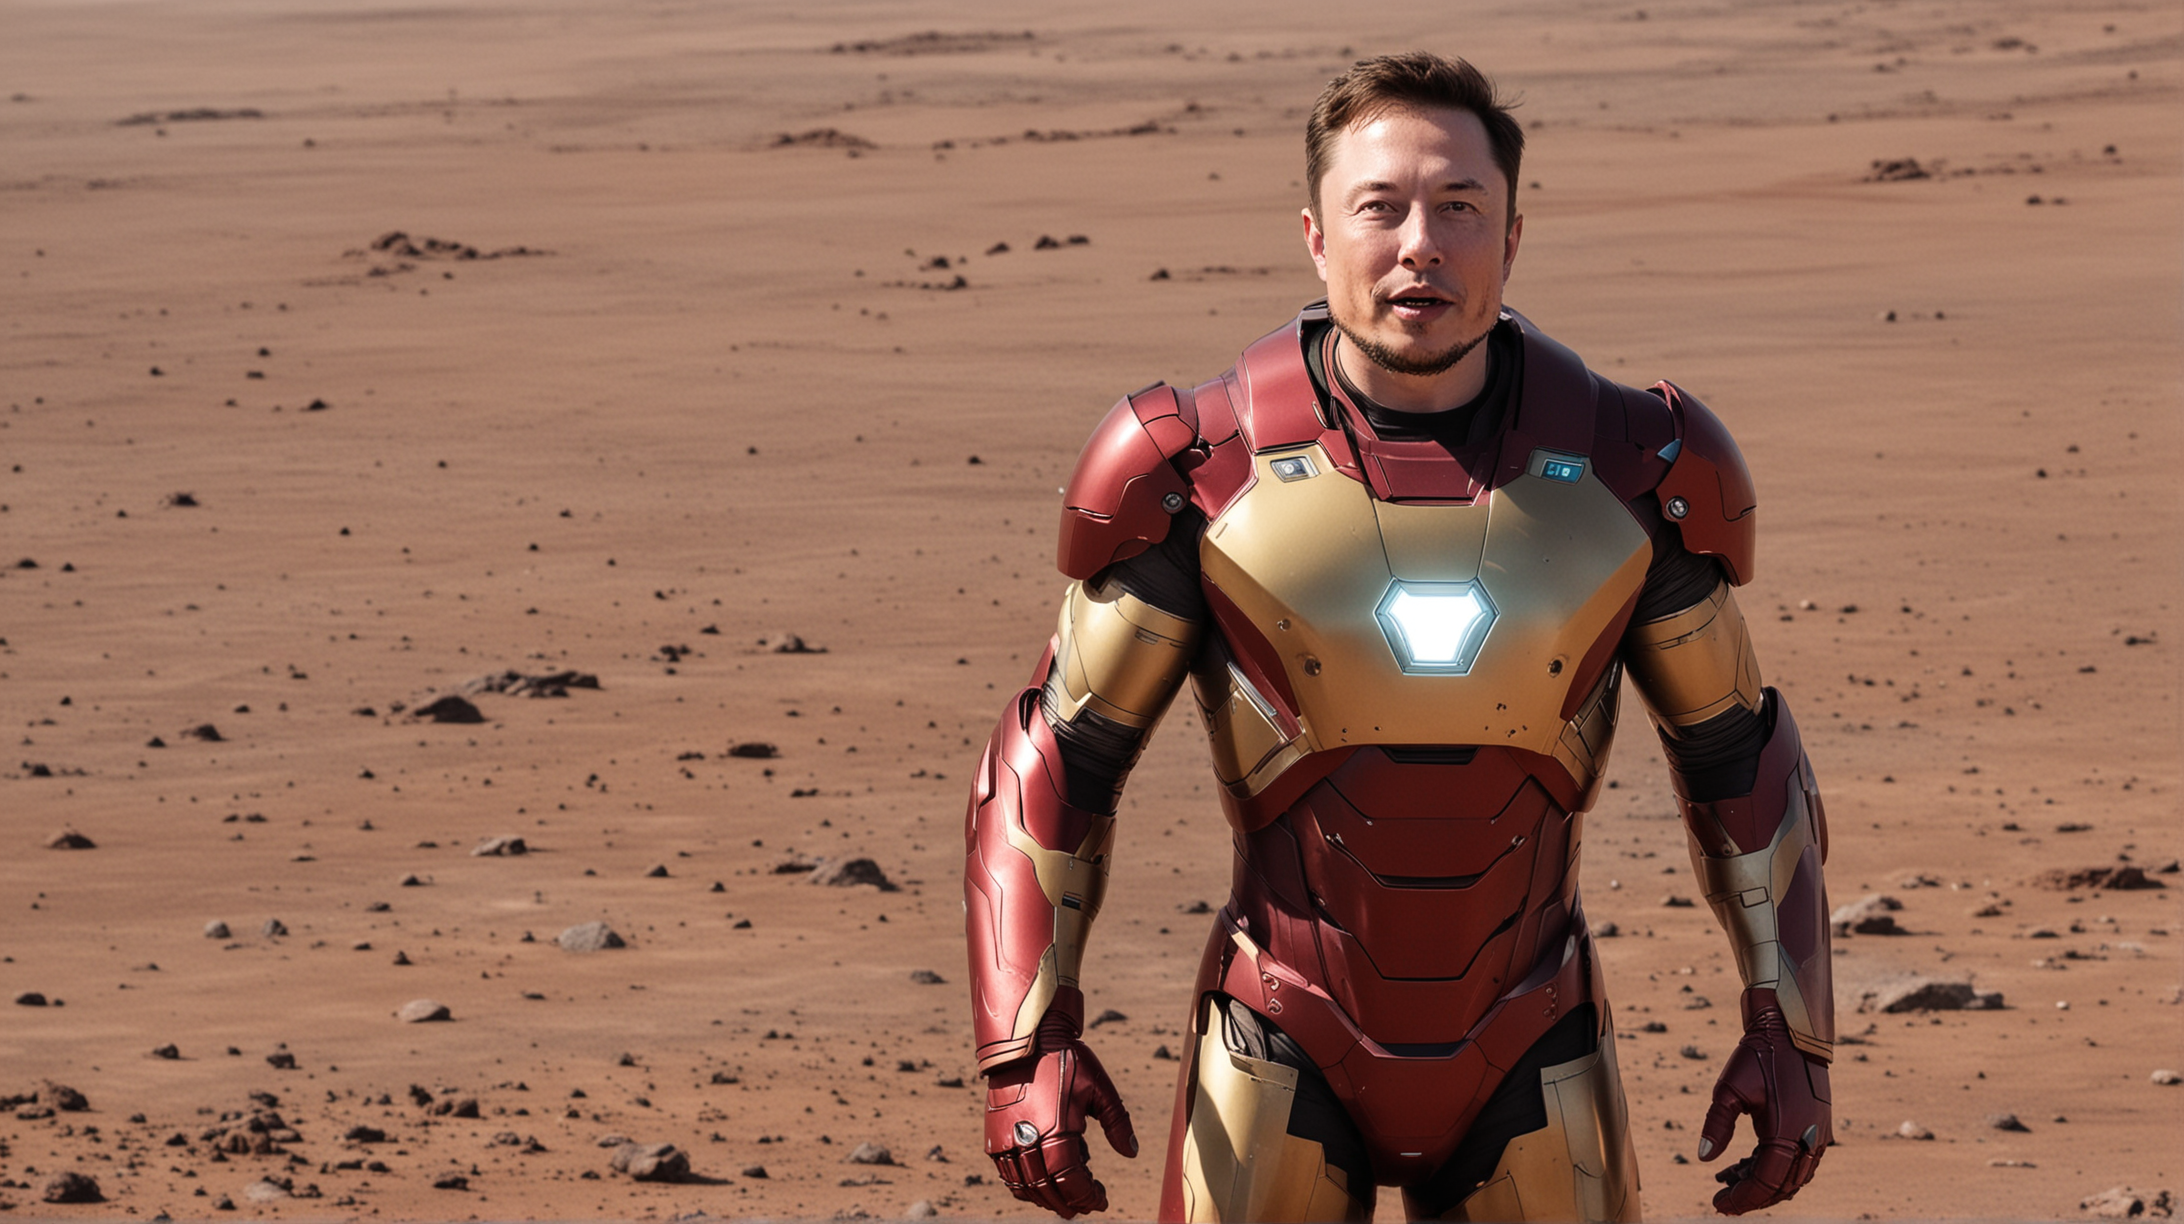 Elon Musk as Iron Man Landing on Mars in a Vibrant Suit